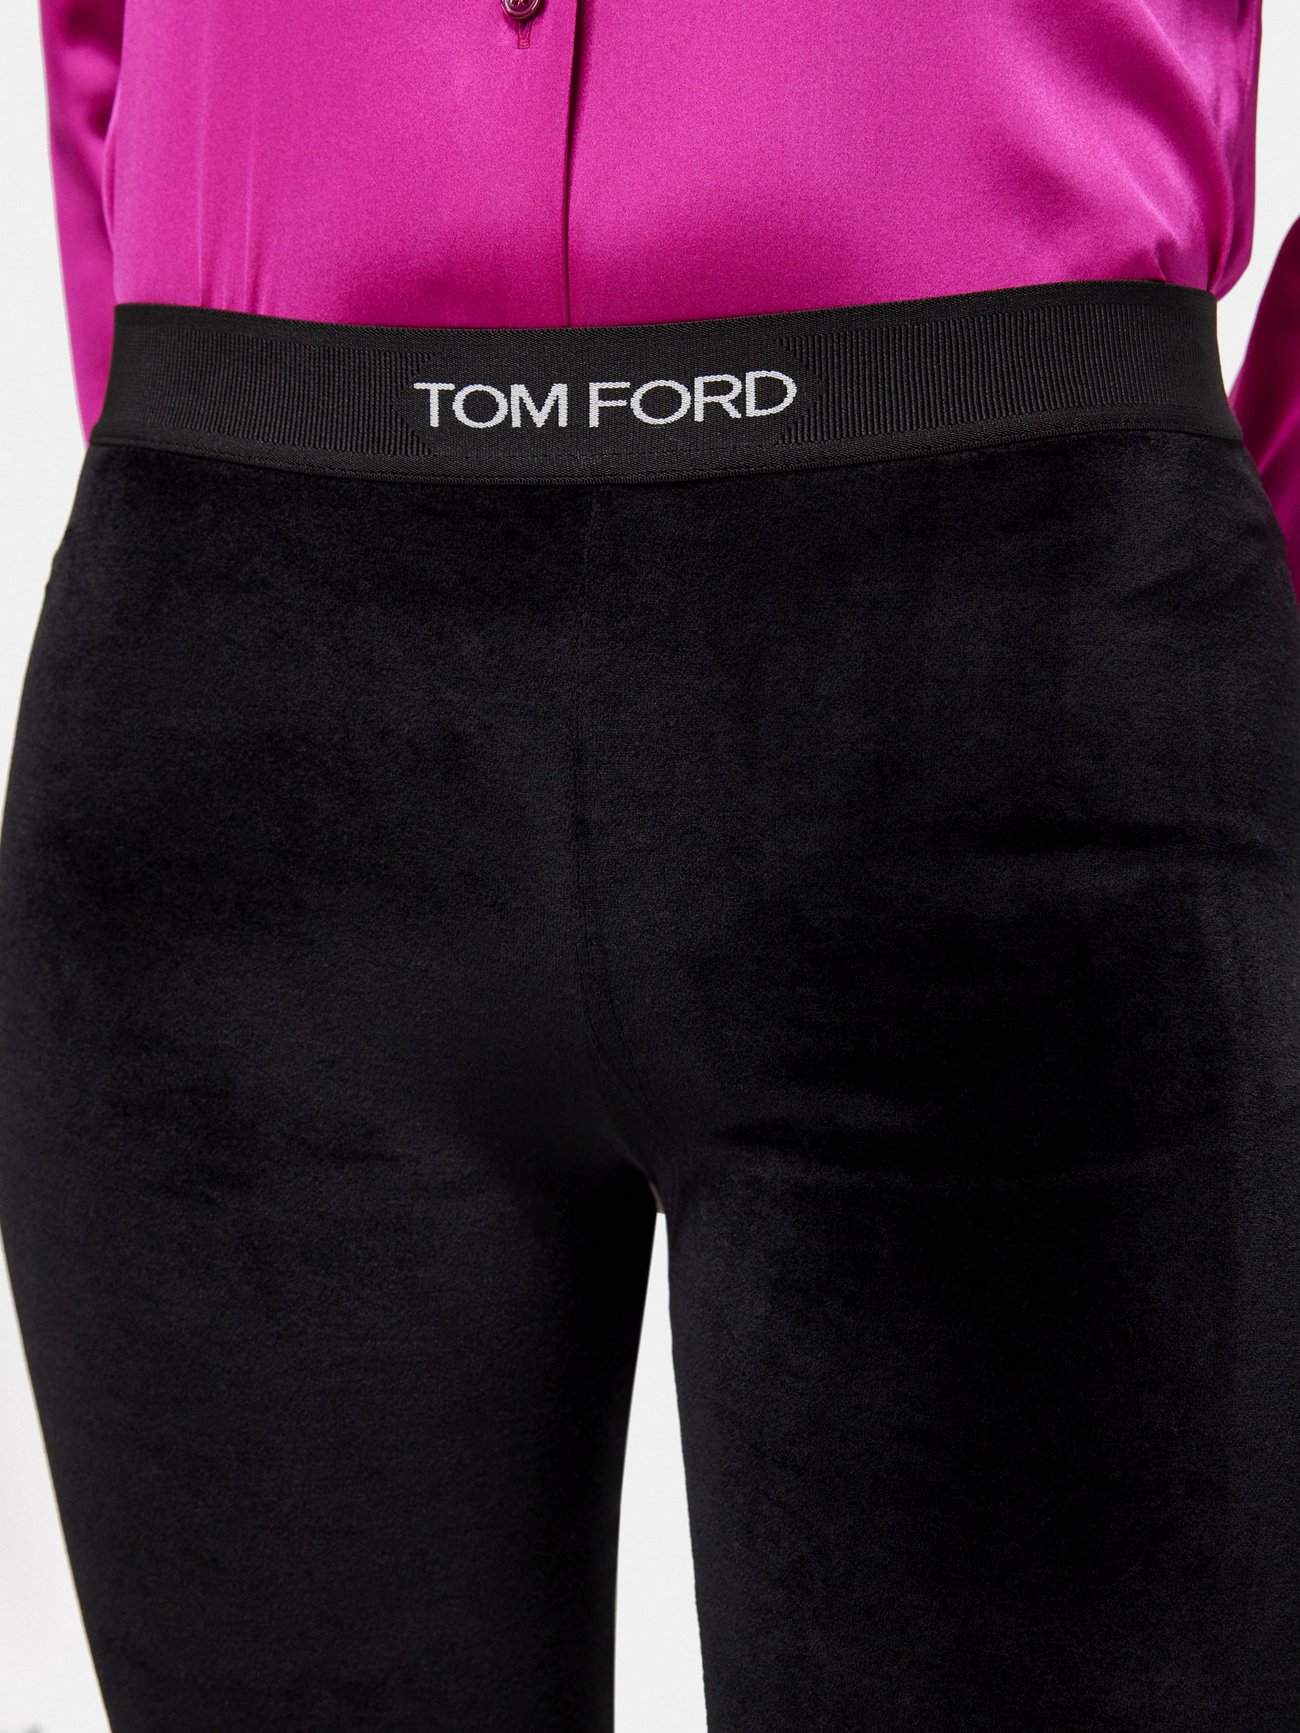 Tom Ford Black Stretch Lycra Signature LEGGINGS